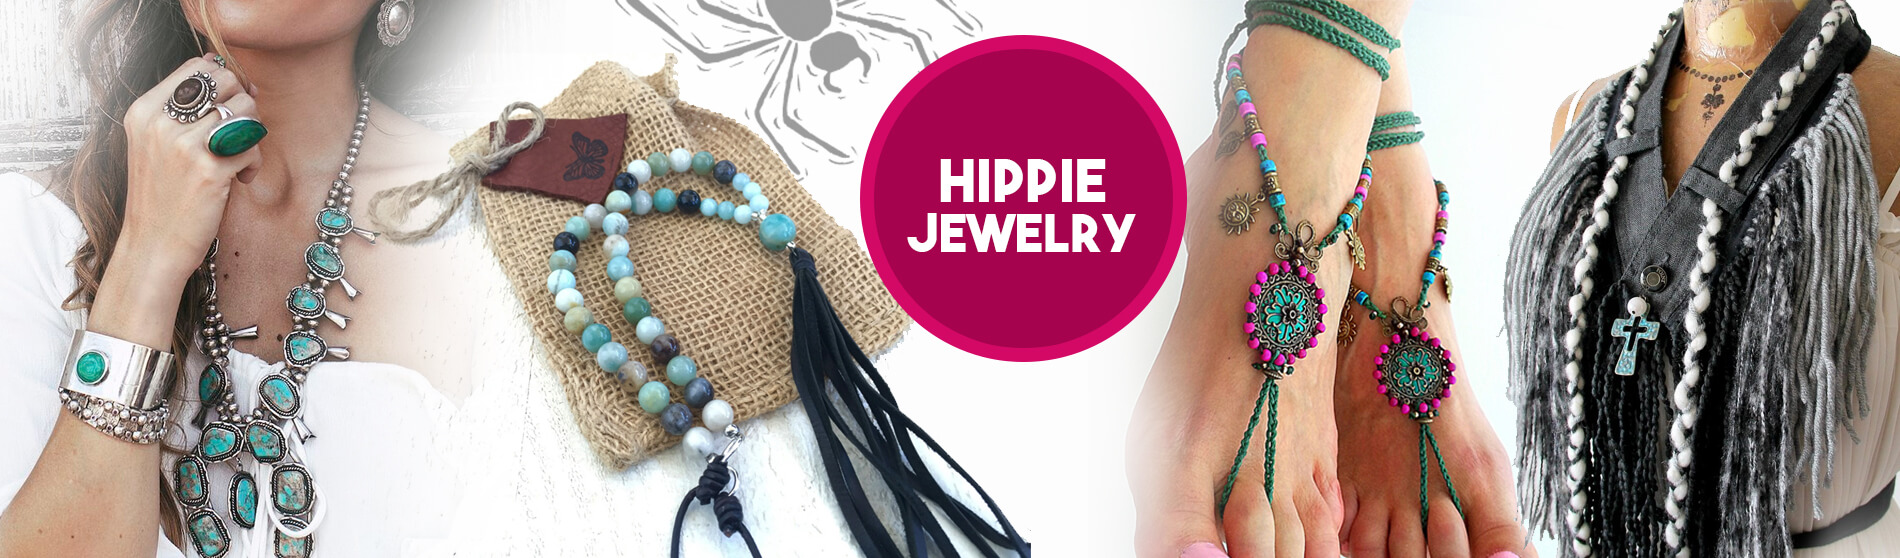 Glendale Halloween : Hippie-Jewelry